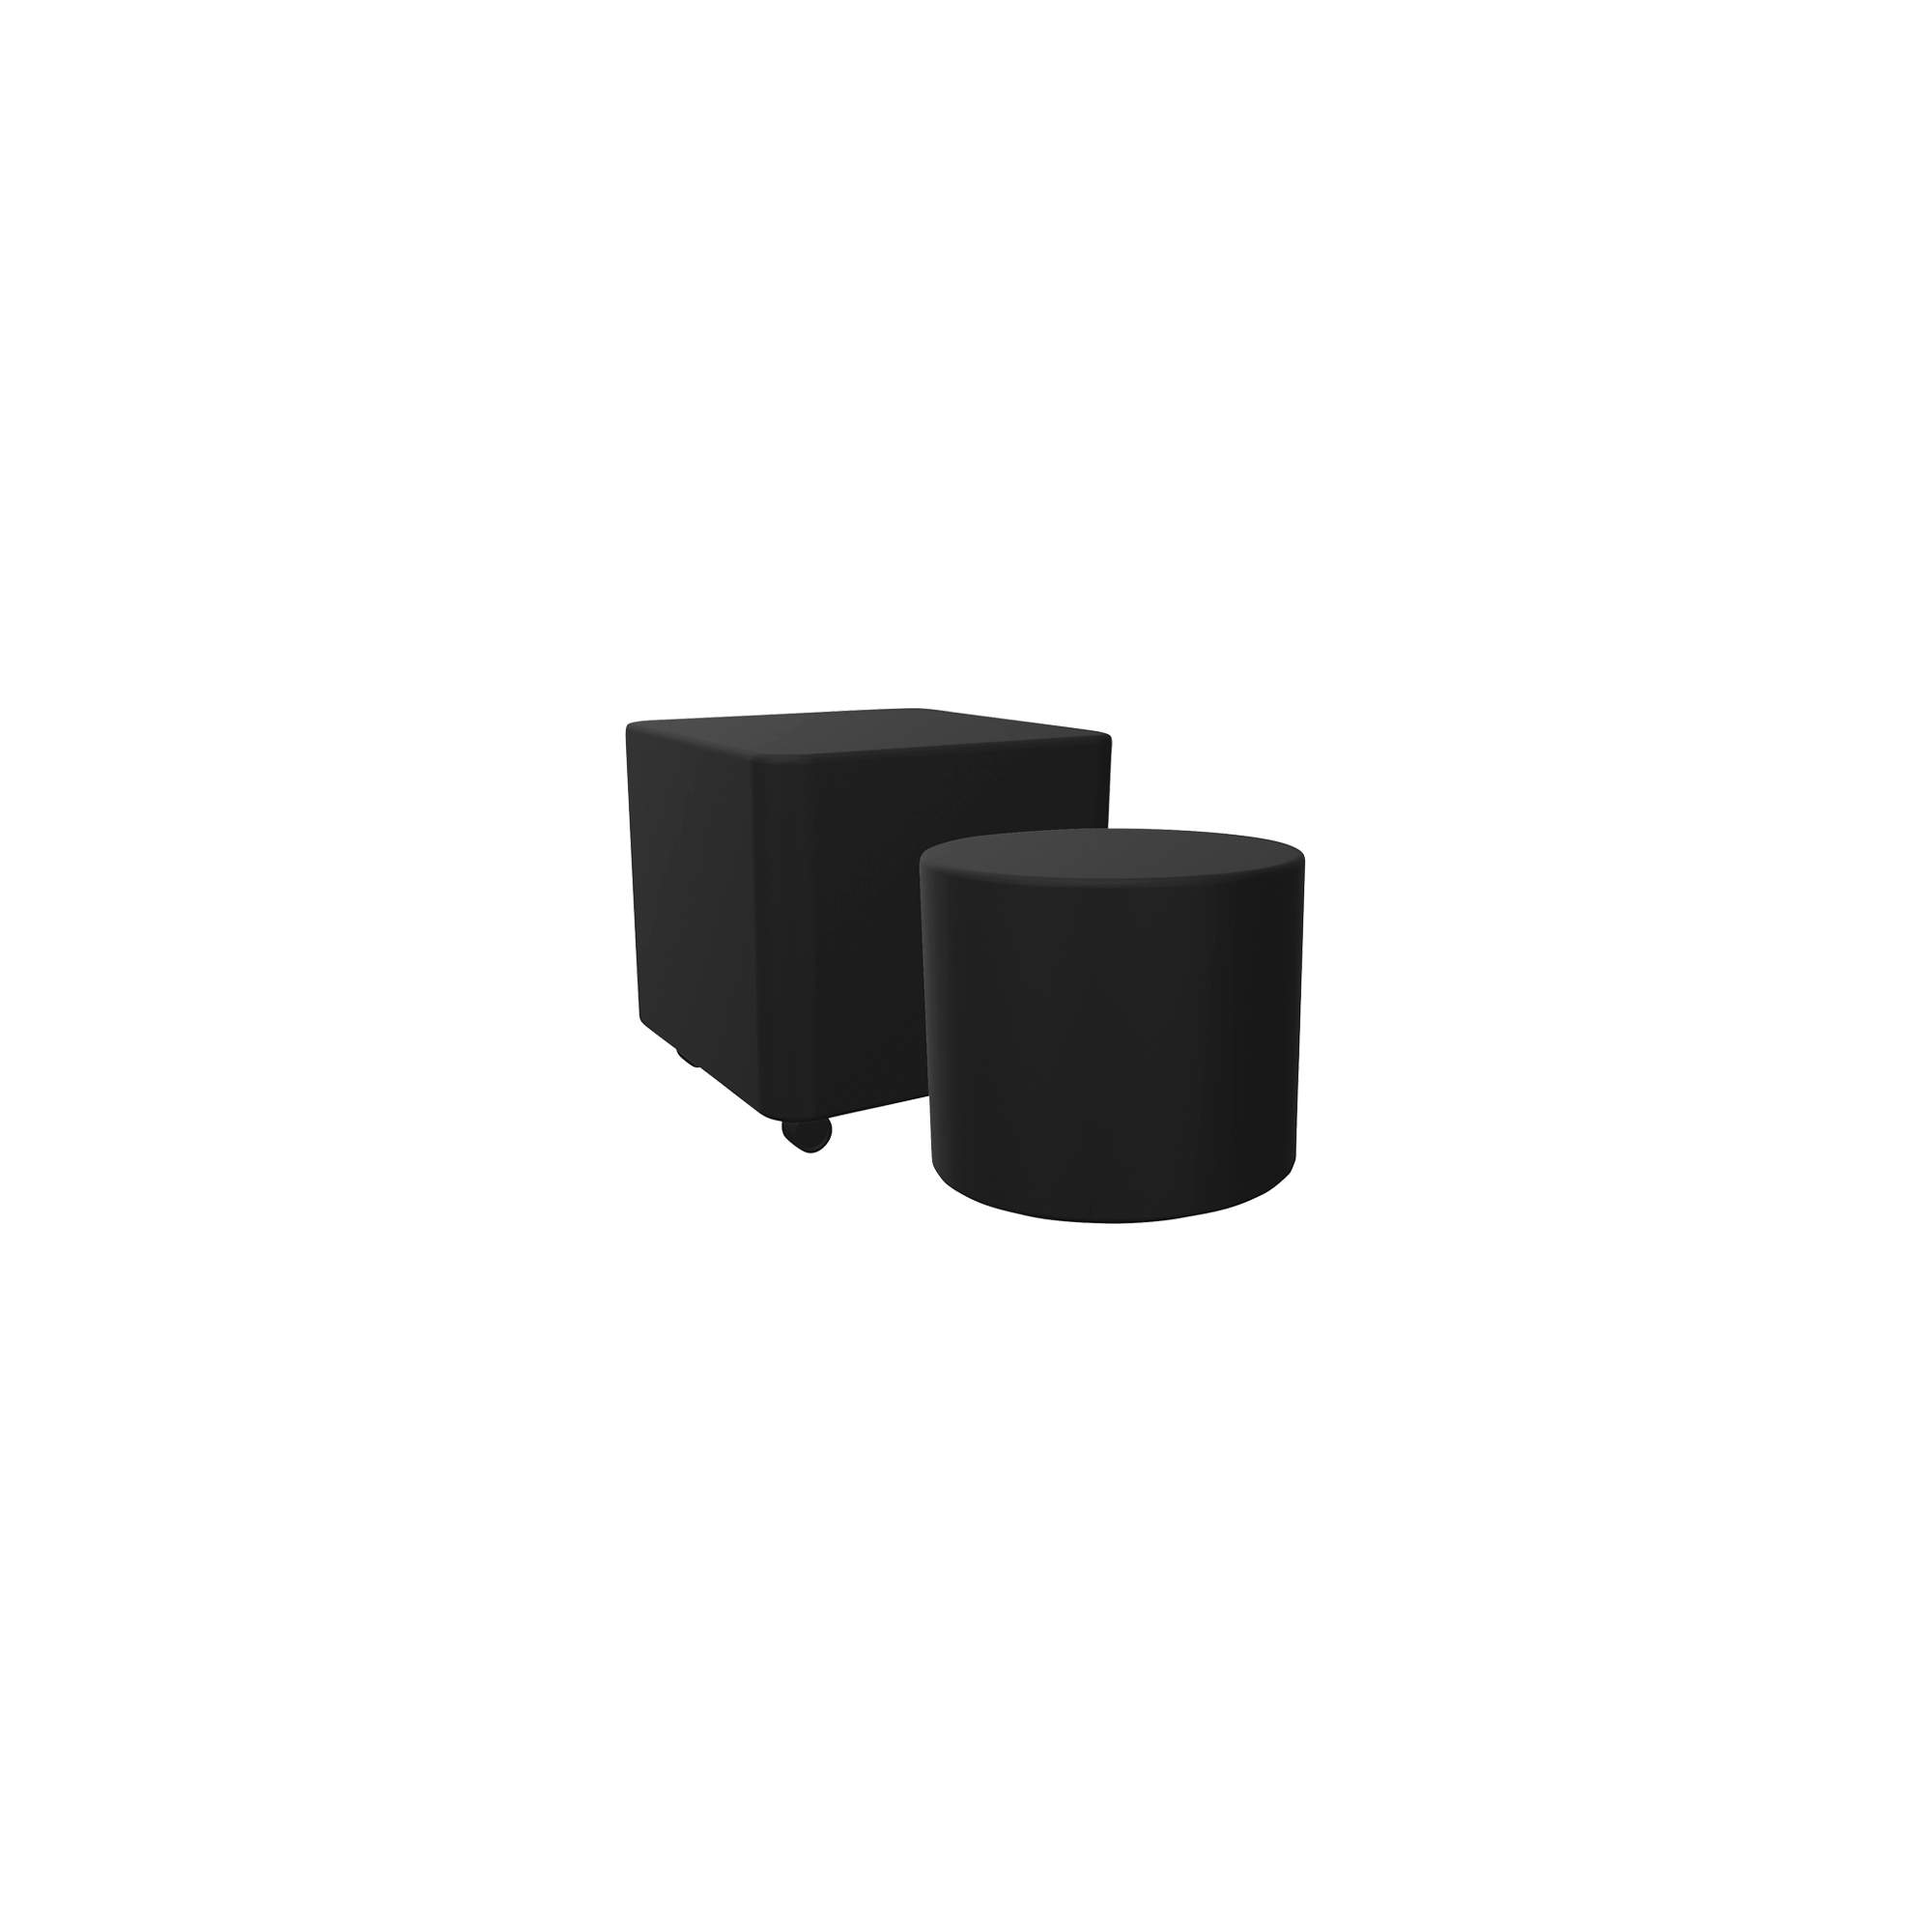 A black cuboid and a black cylindrical stool